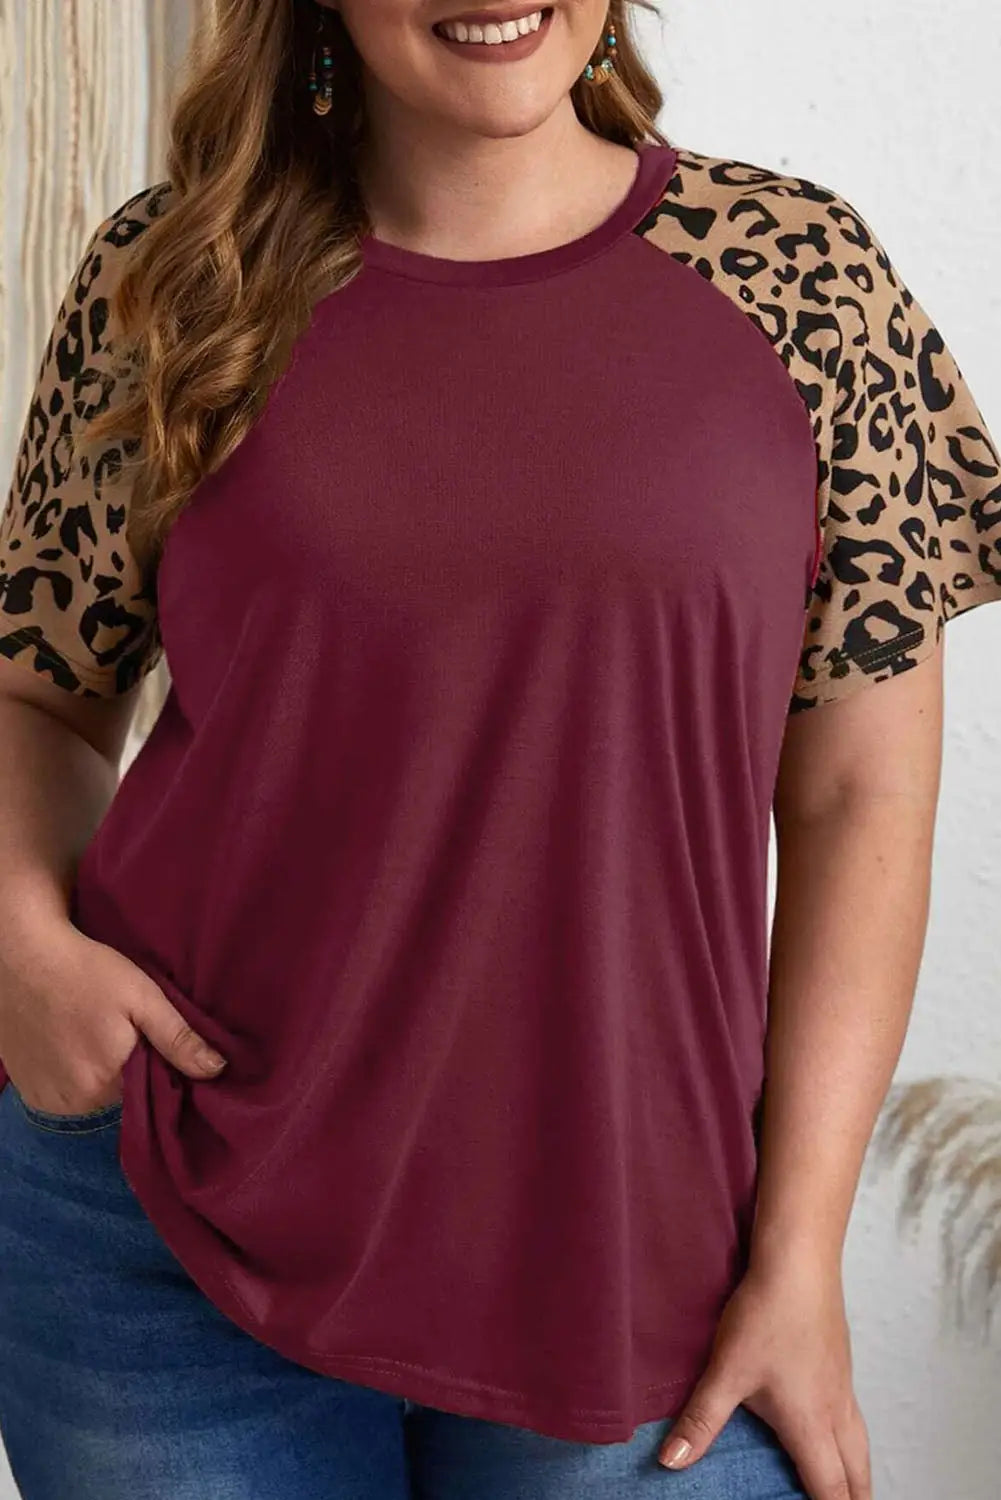 Burgundy contrast leopard raglan sleeve plus size t-shirt - 1x / 62% polyester + 32% cotton + 6% elastane